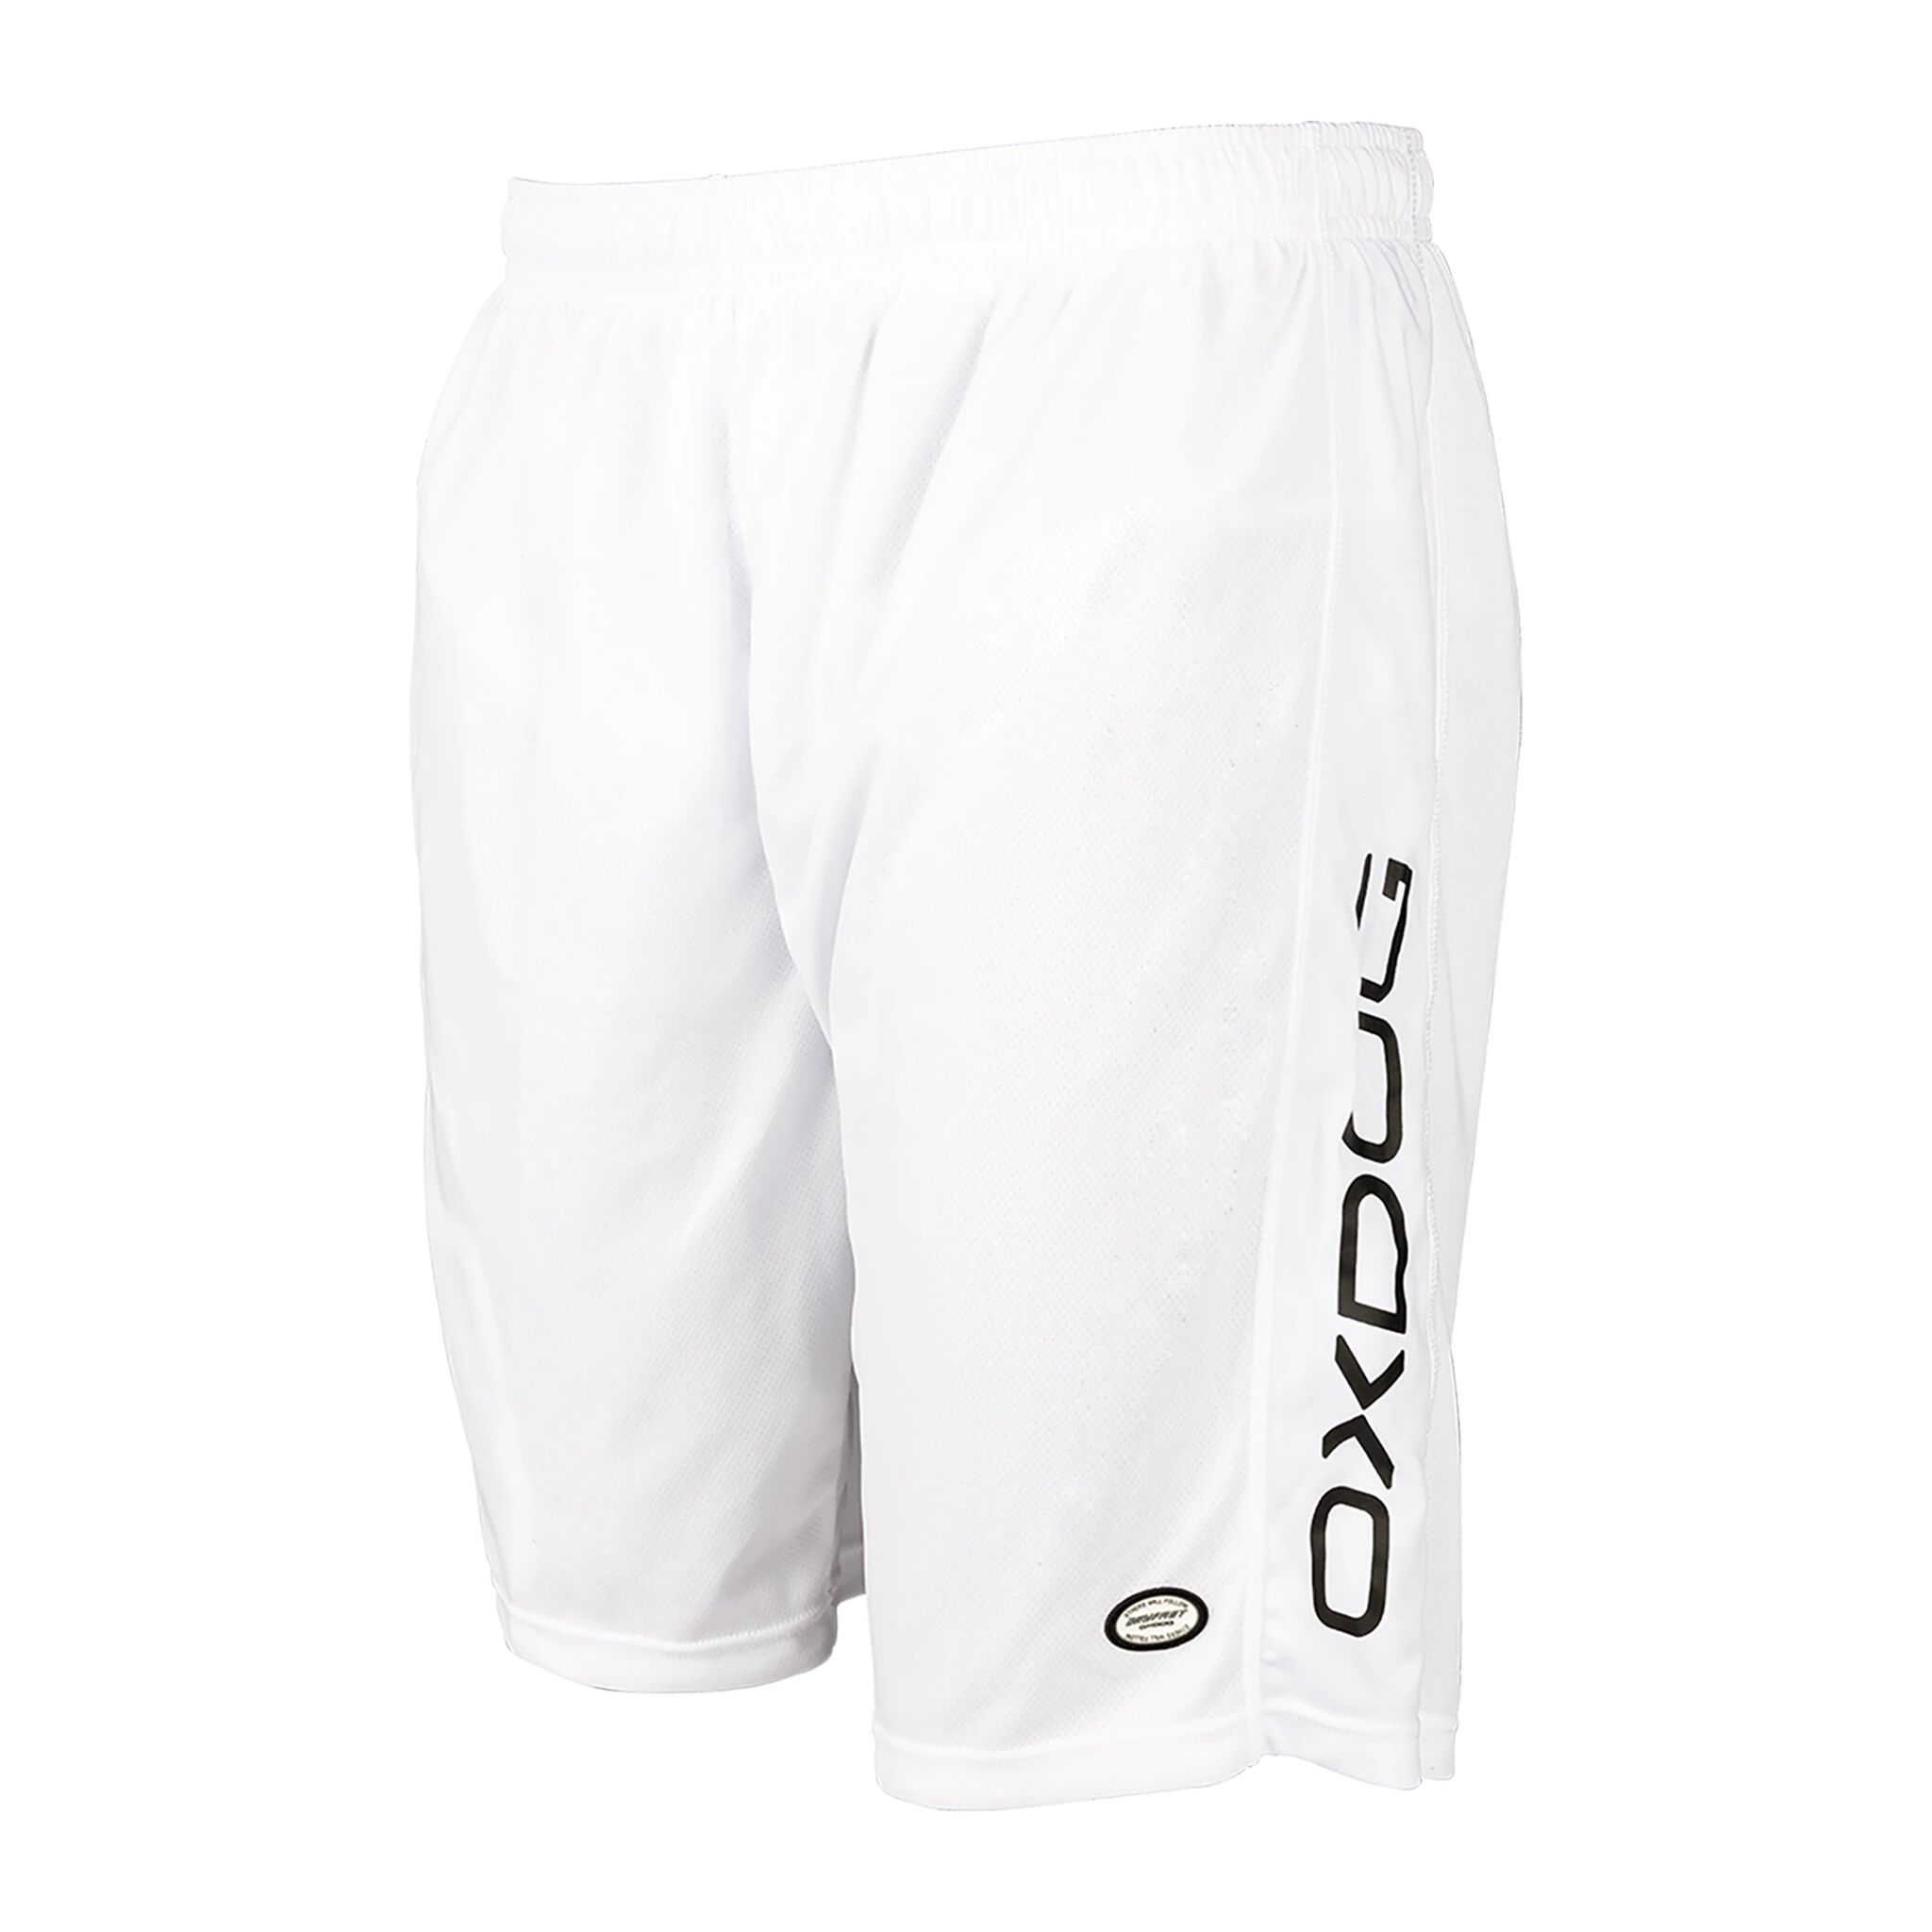 Oxdog 2021 AVALON SHORTS Sr, shorts senior 128 White